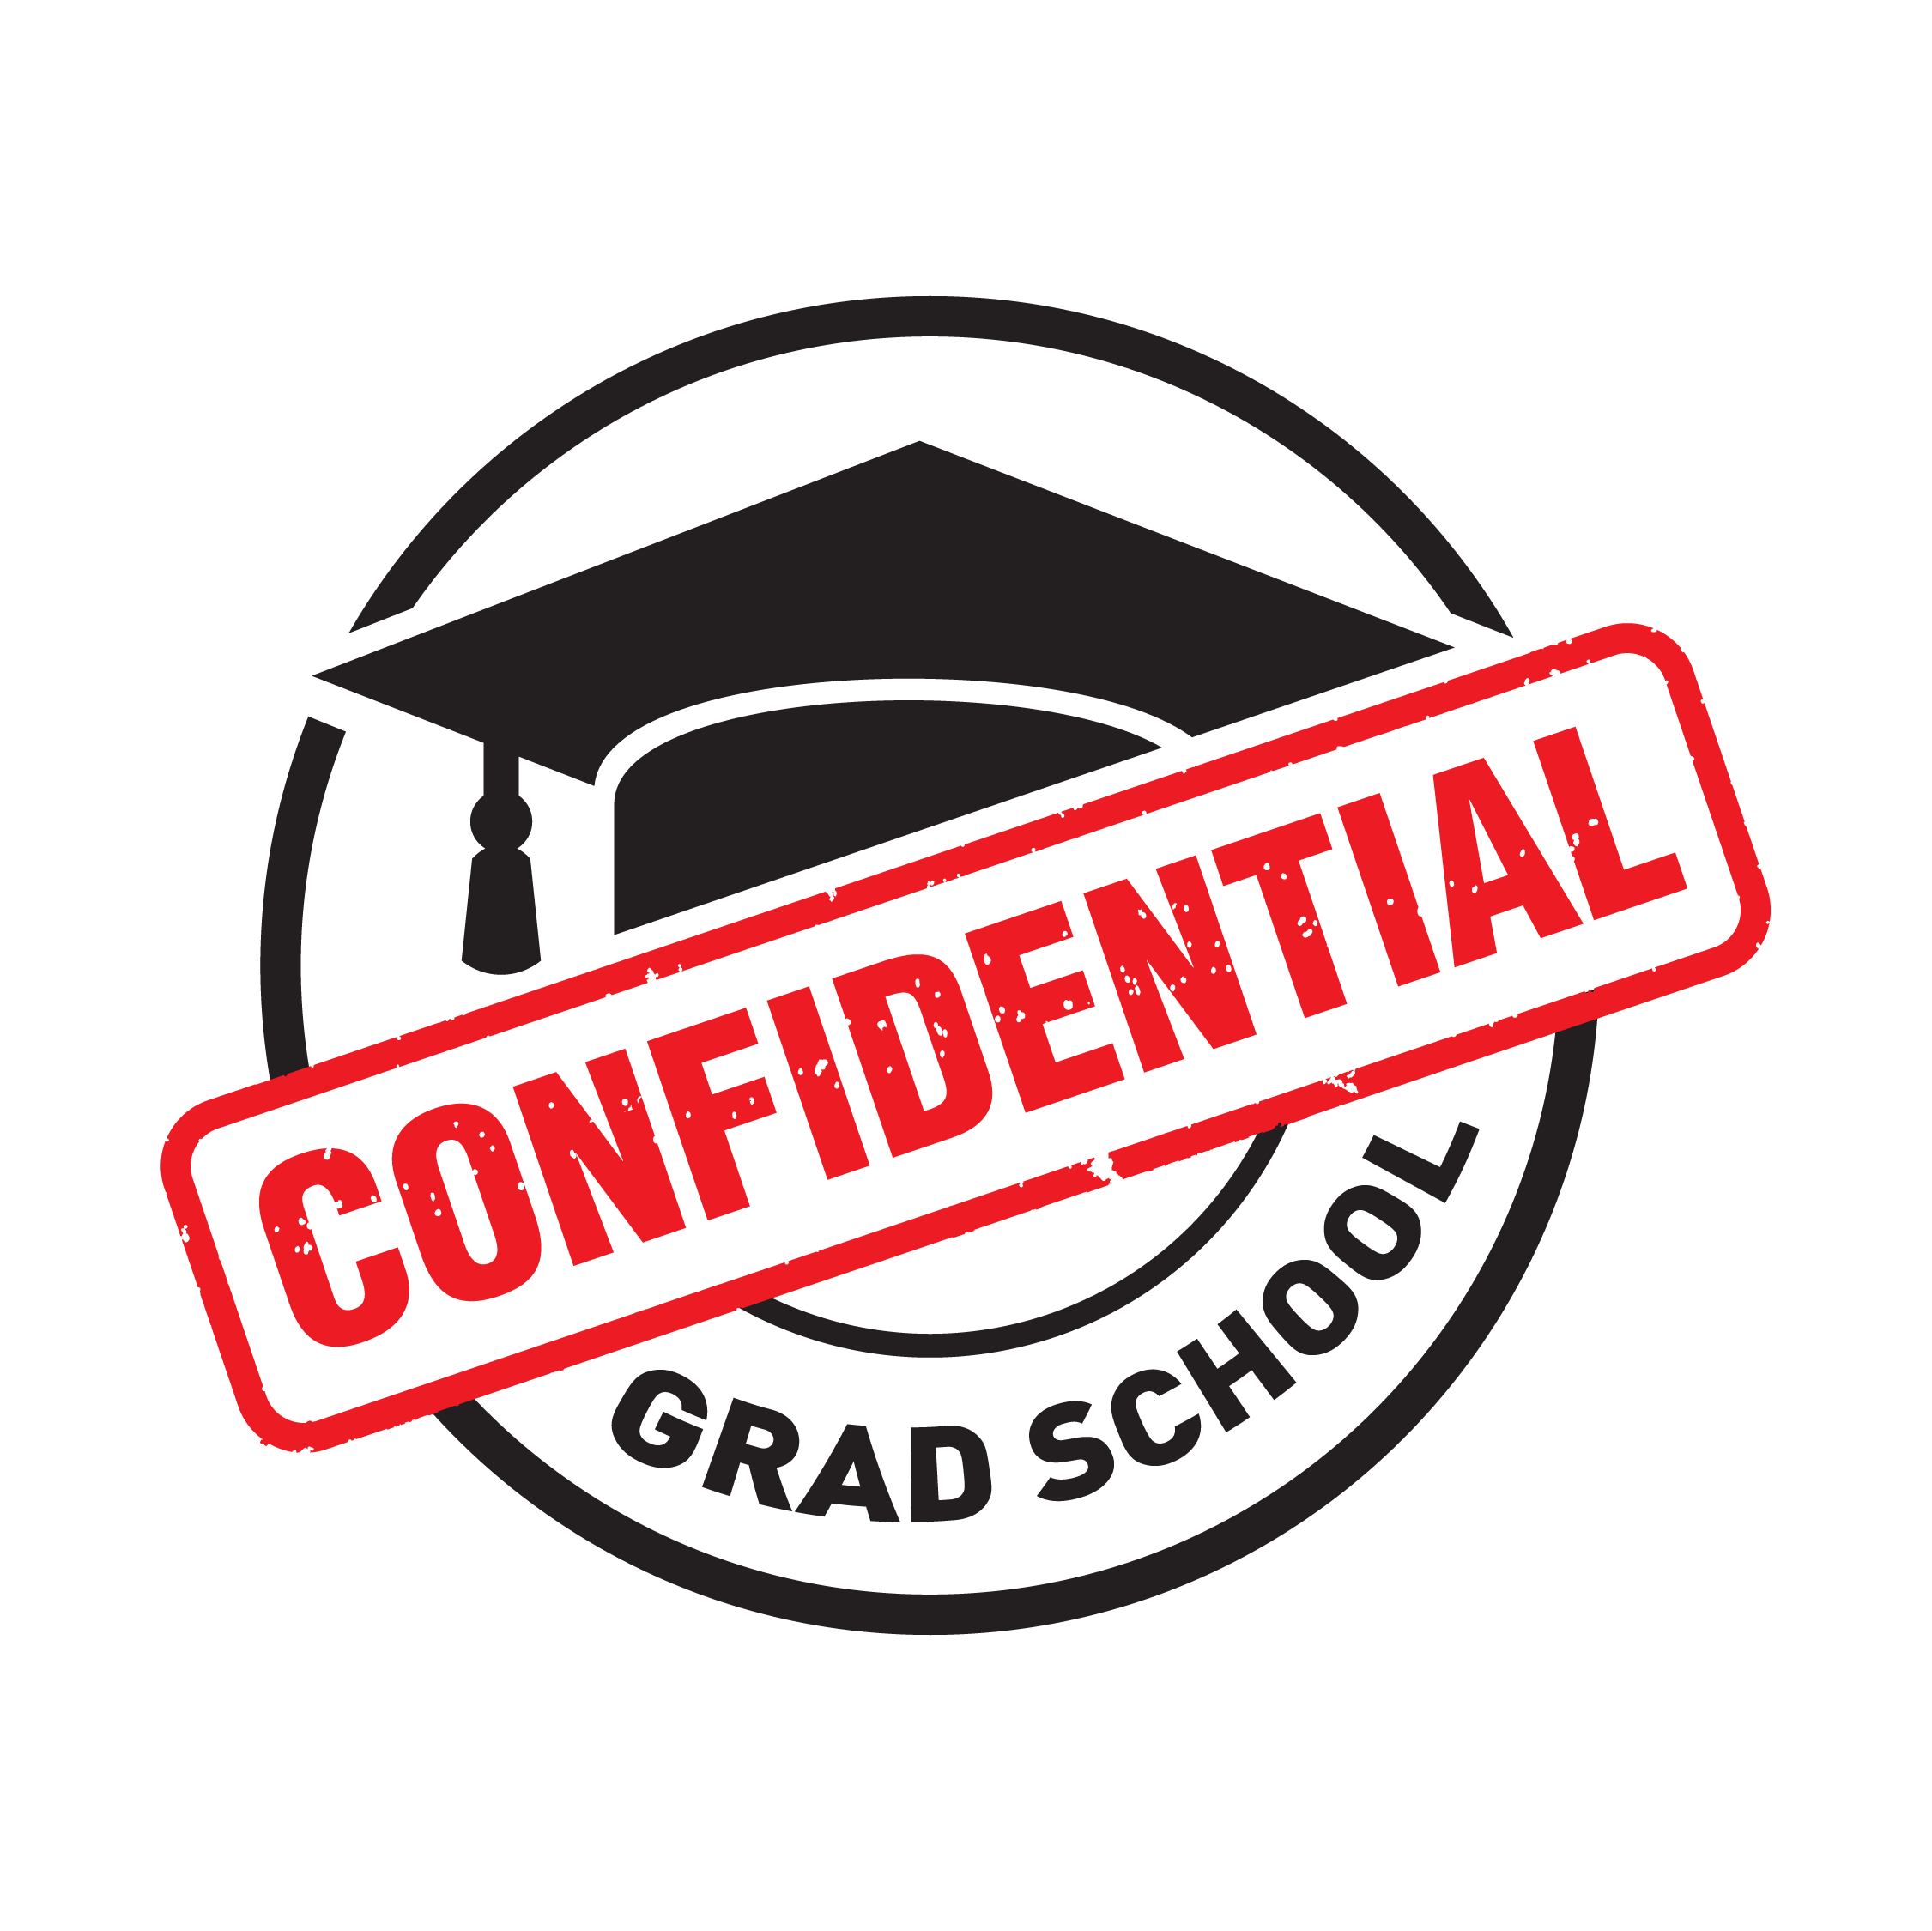 https://www.ualberta.ca/graduate-studies/media-library/gradschoolconfidential-new-robkev/20201031-grad-school-confid-logo1.png